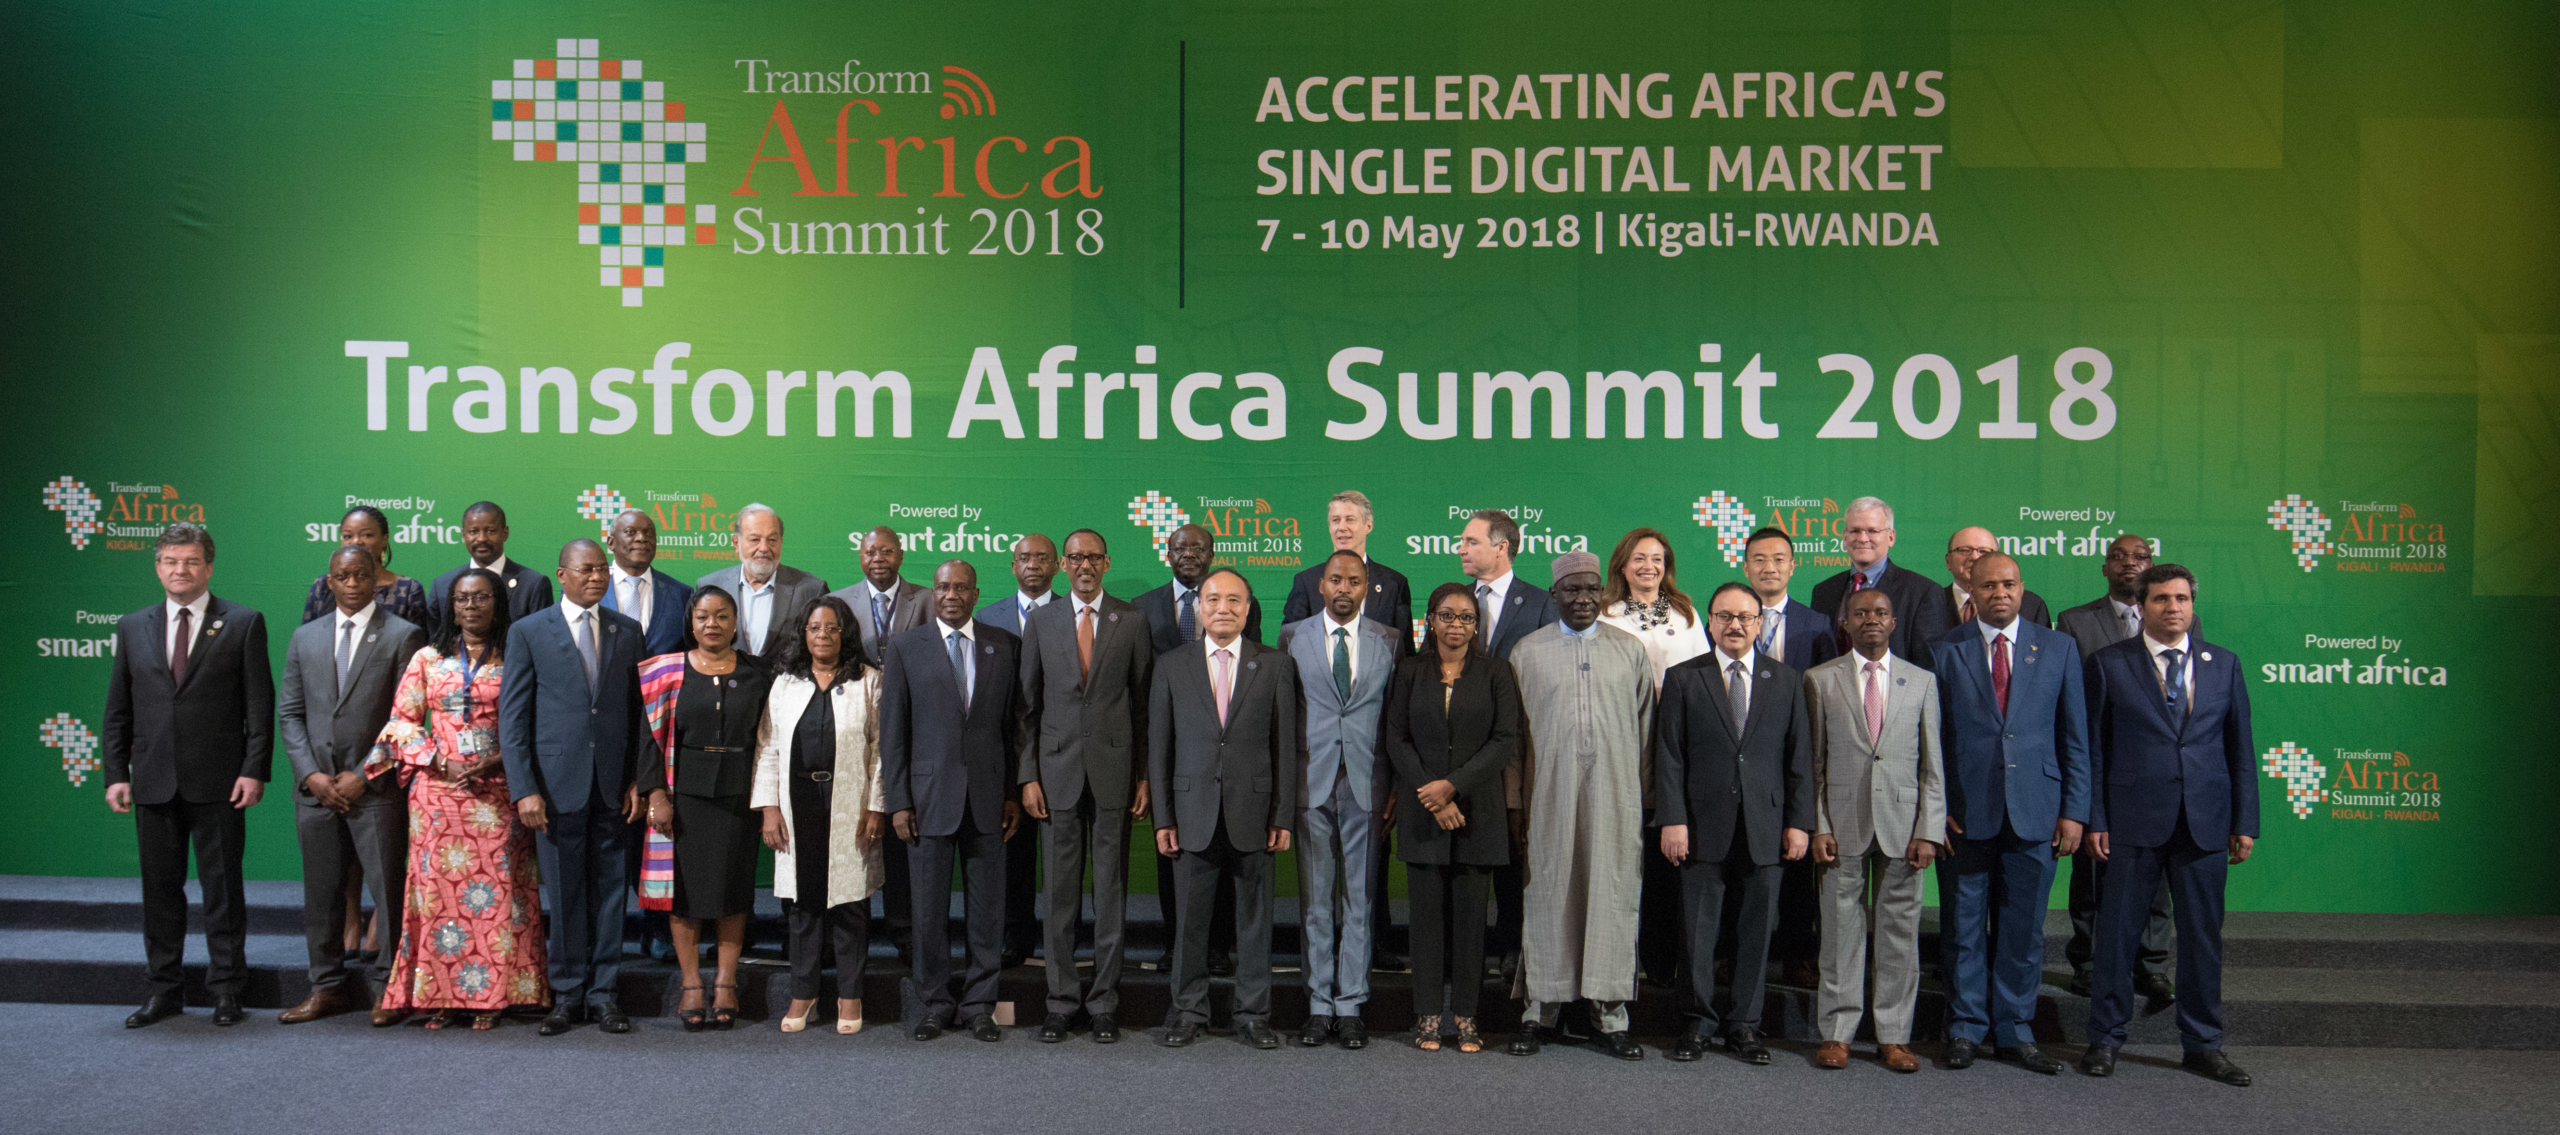 The Transform Africa Summit